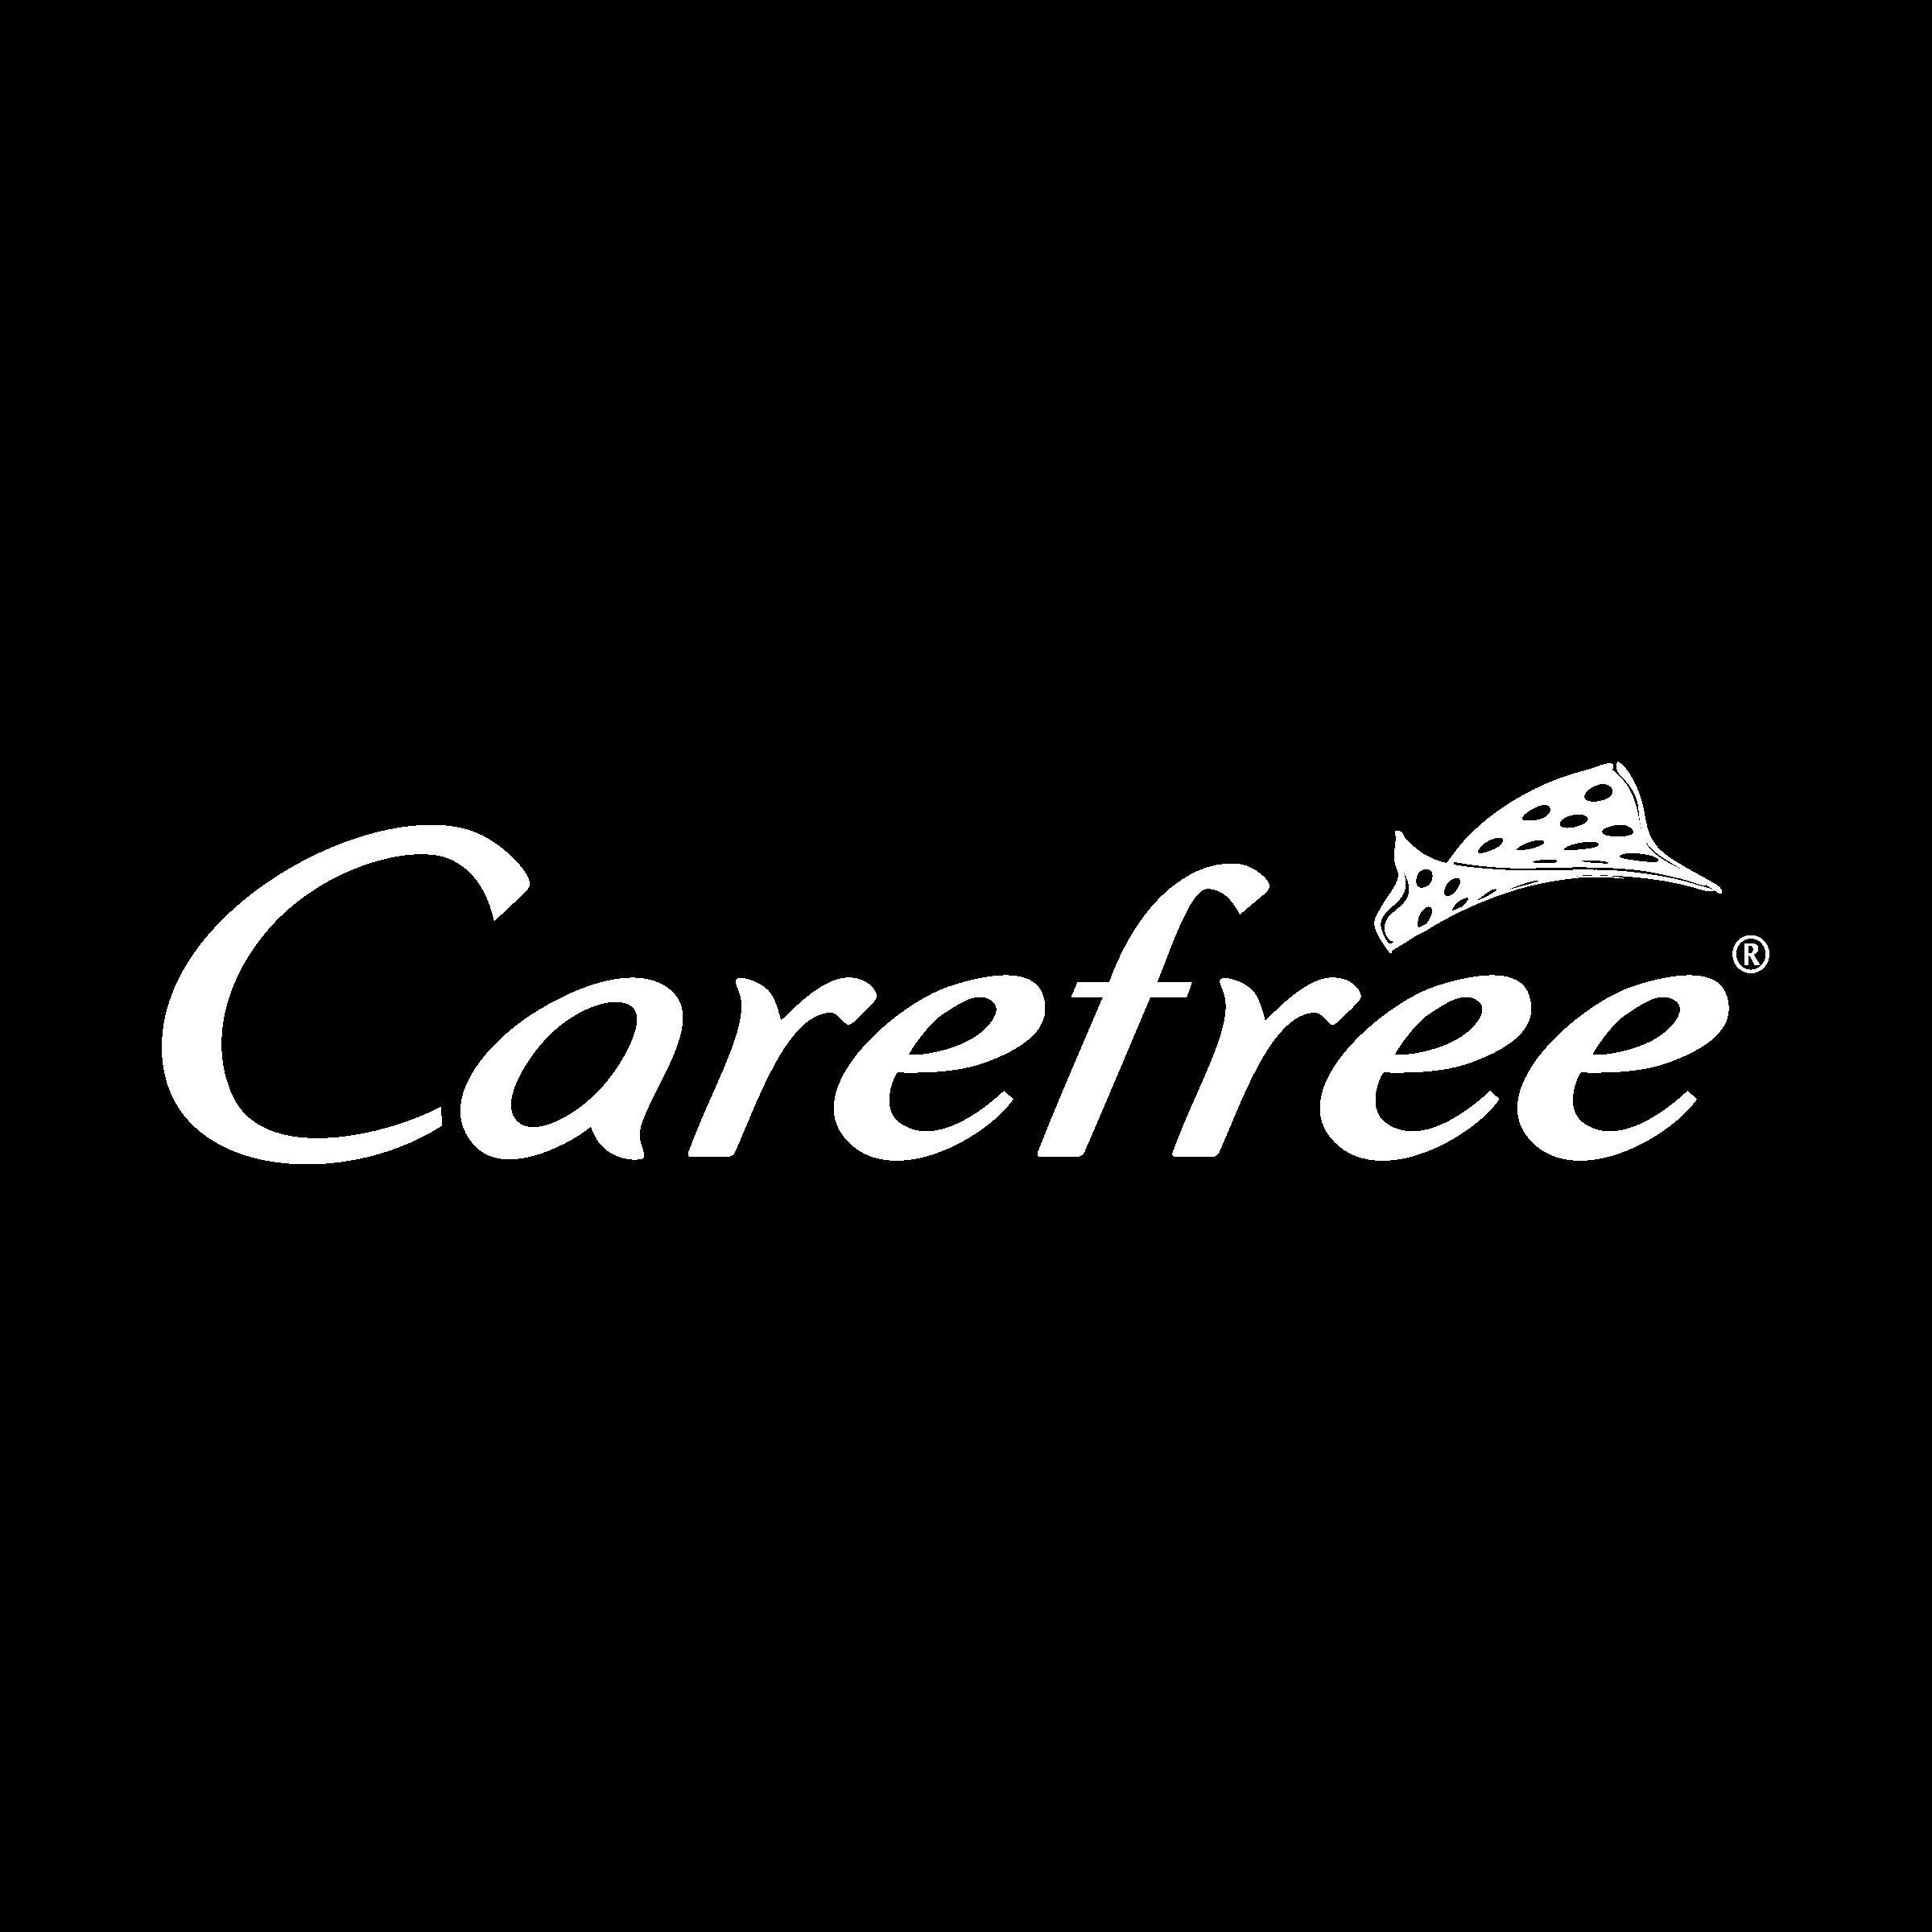 Carefree Logo - Carefree Logo PNG Transparent & SVG Vector - Freebie Supply